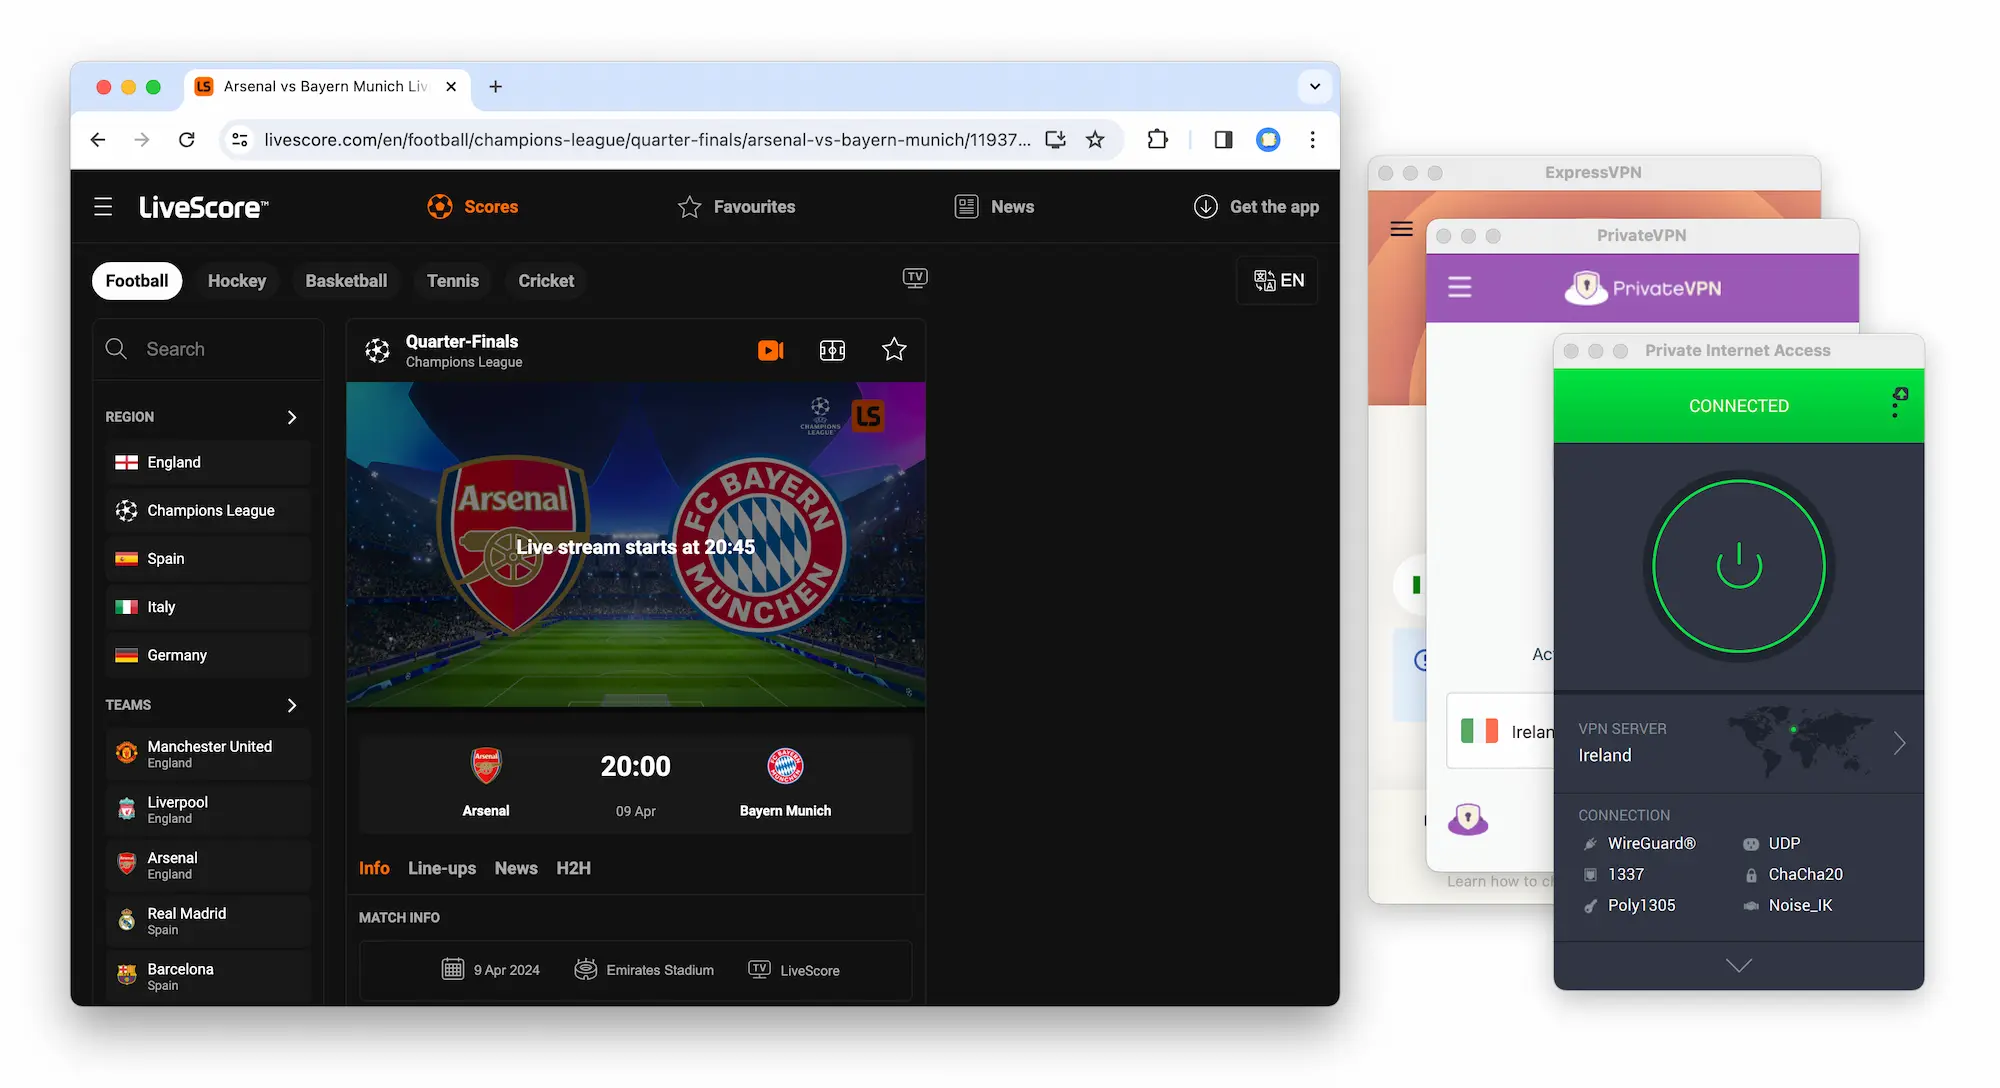 LiveScore website showing an upcoming Arsenal vs Bayern Munich match alongside various VPN services.